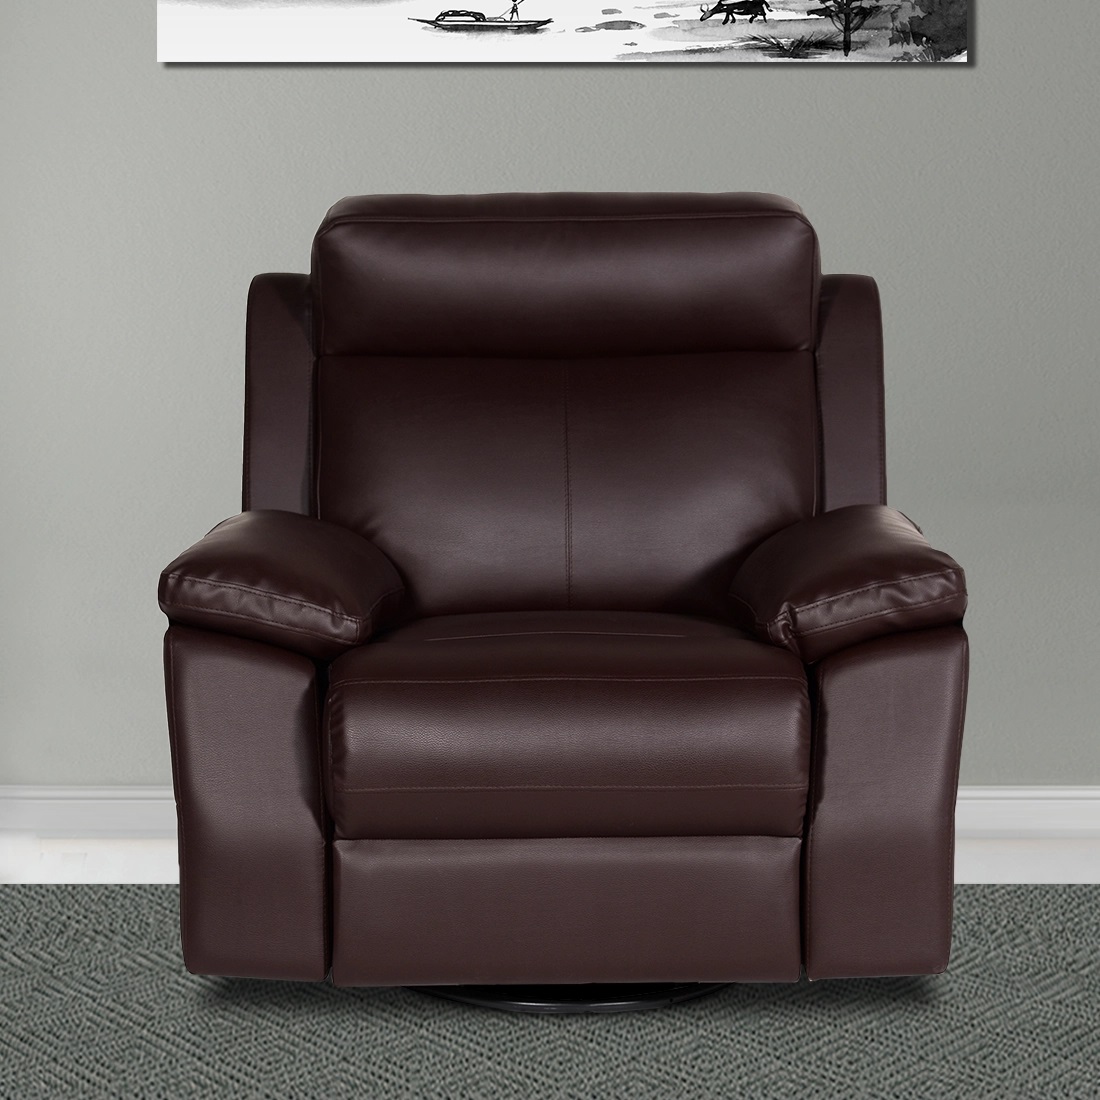 Single Seater Manual Recliner Sofa - Lazino Brown | 1 Seater Recliner Chair